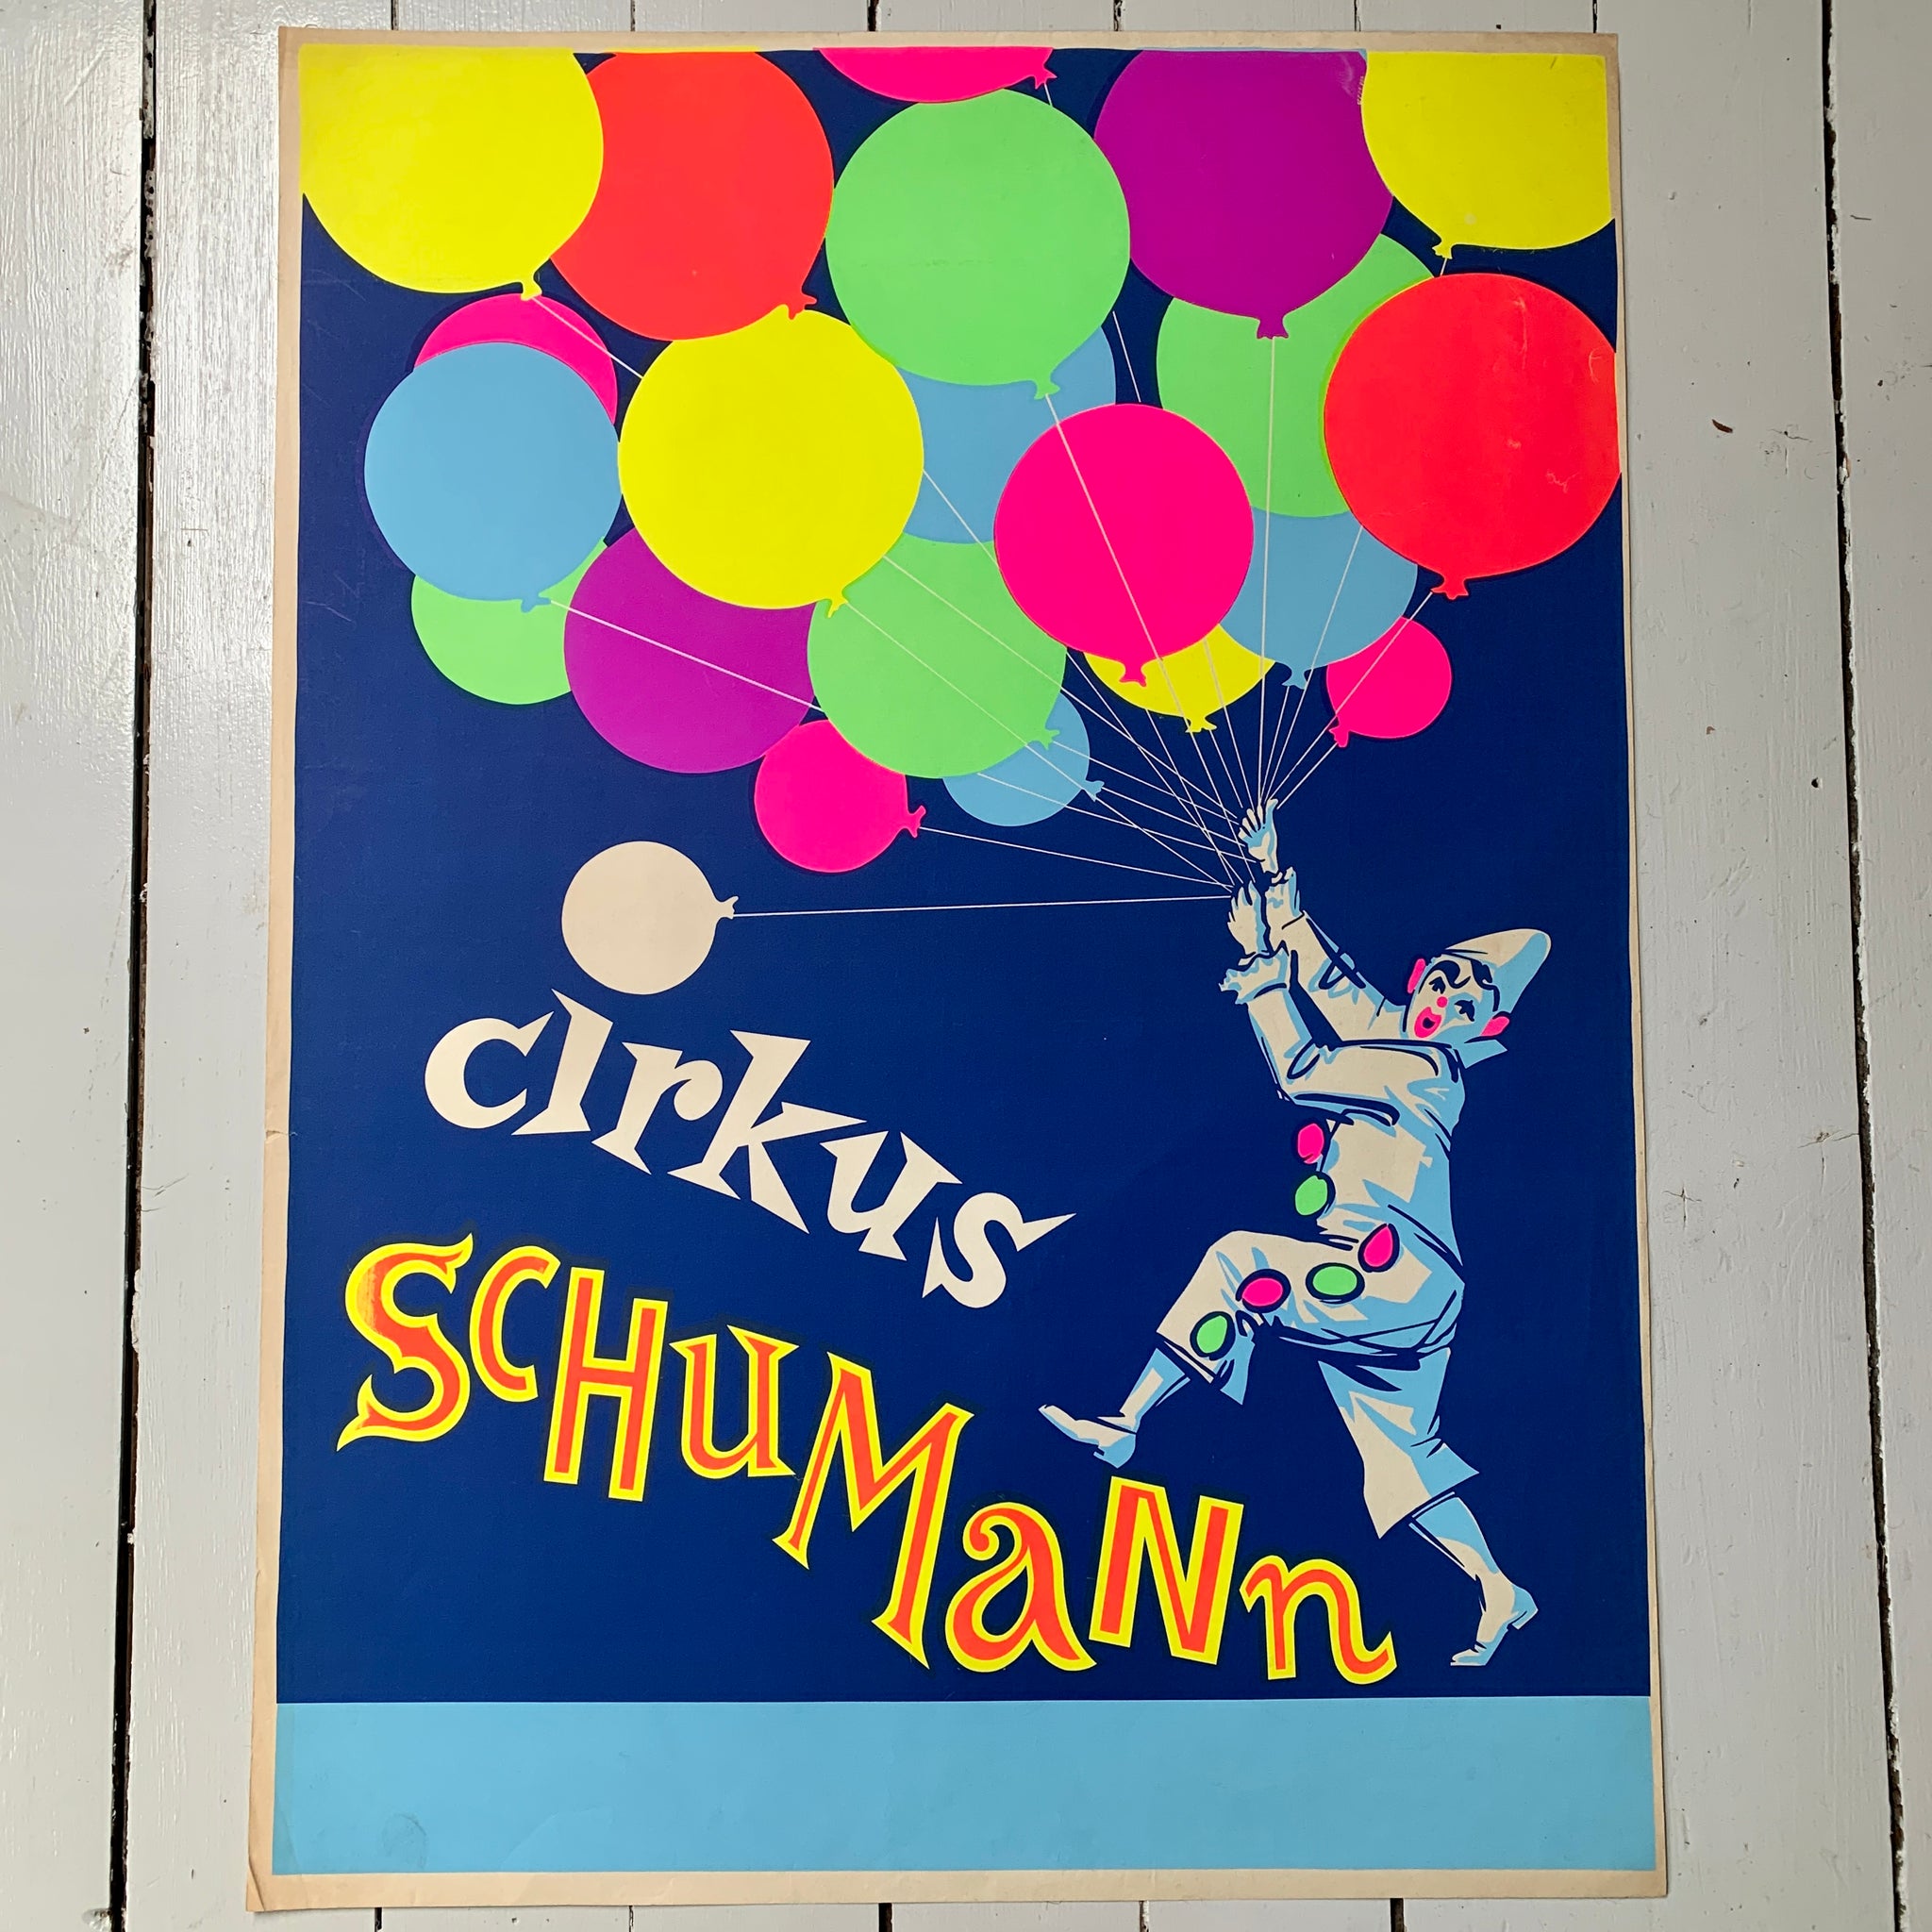 Original Cirkus Schumann plakat, fra 1950/60érne.